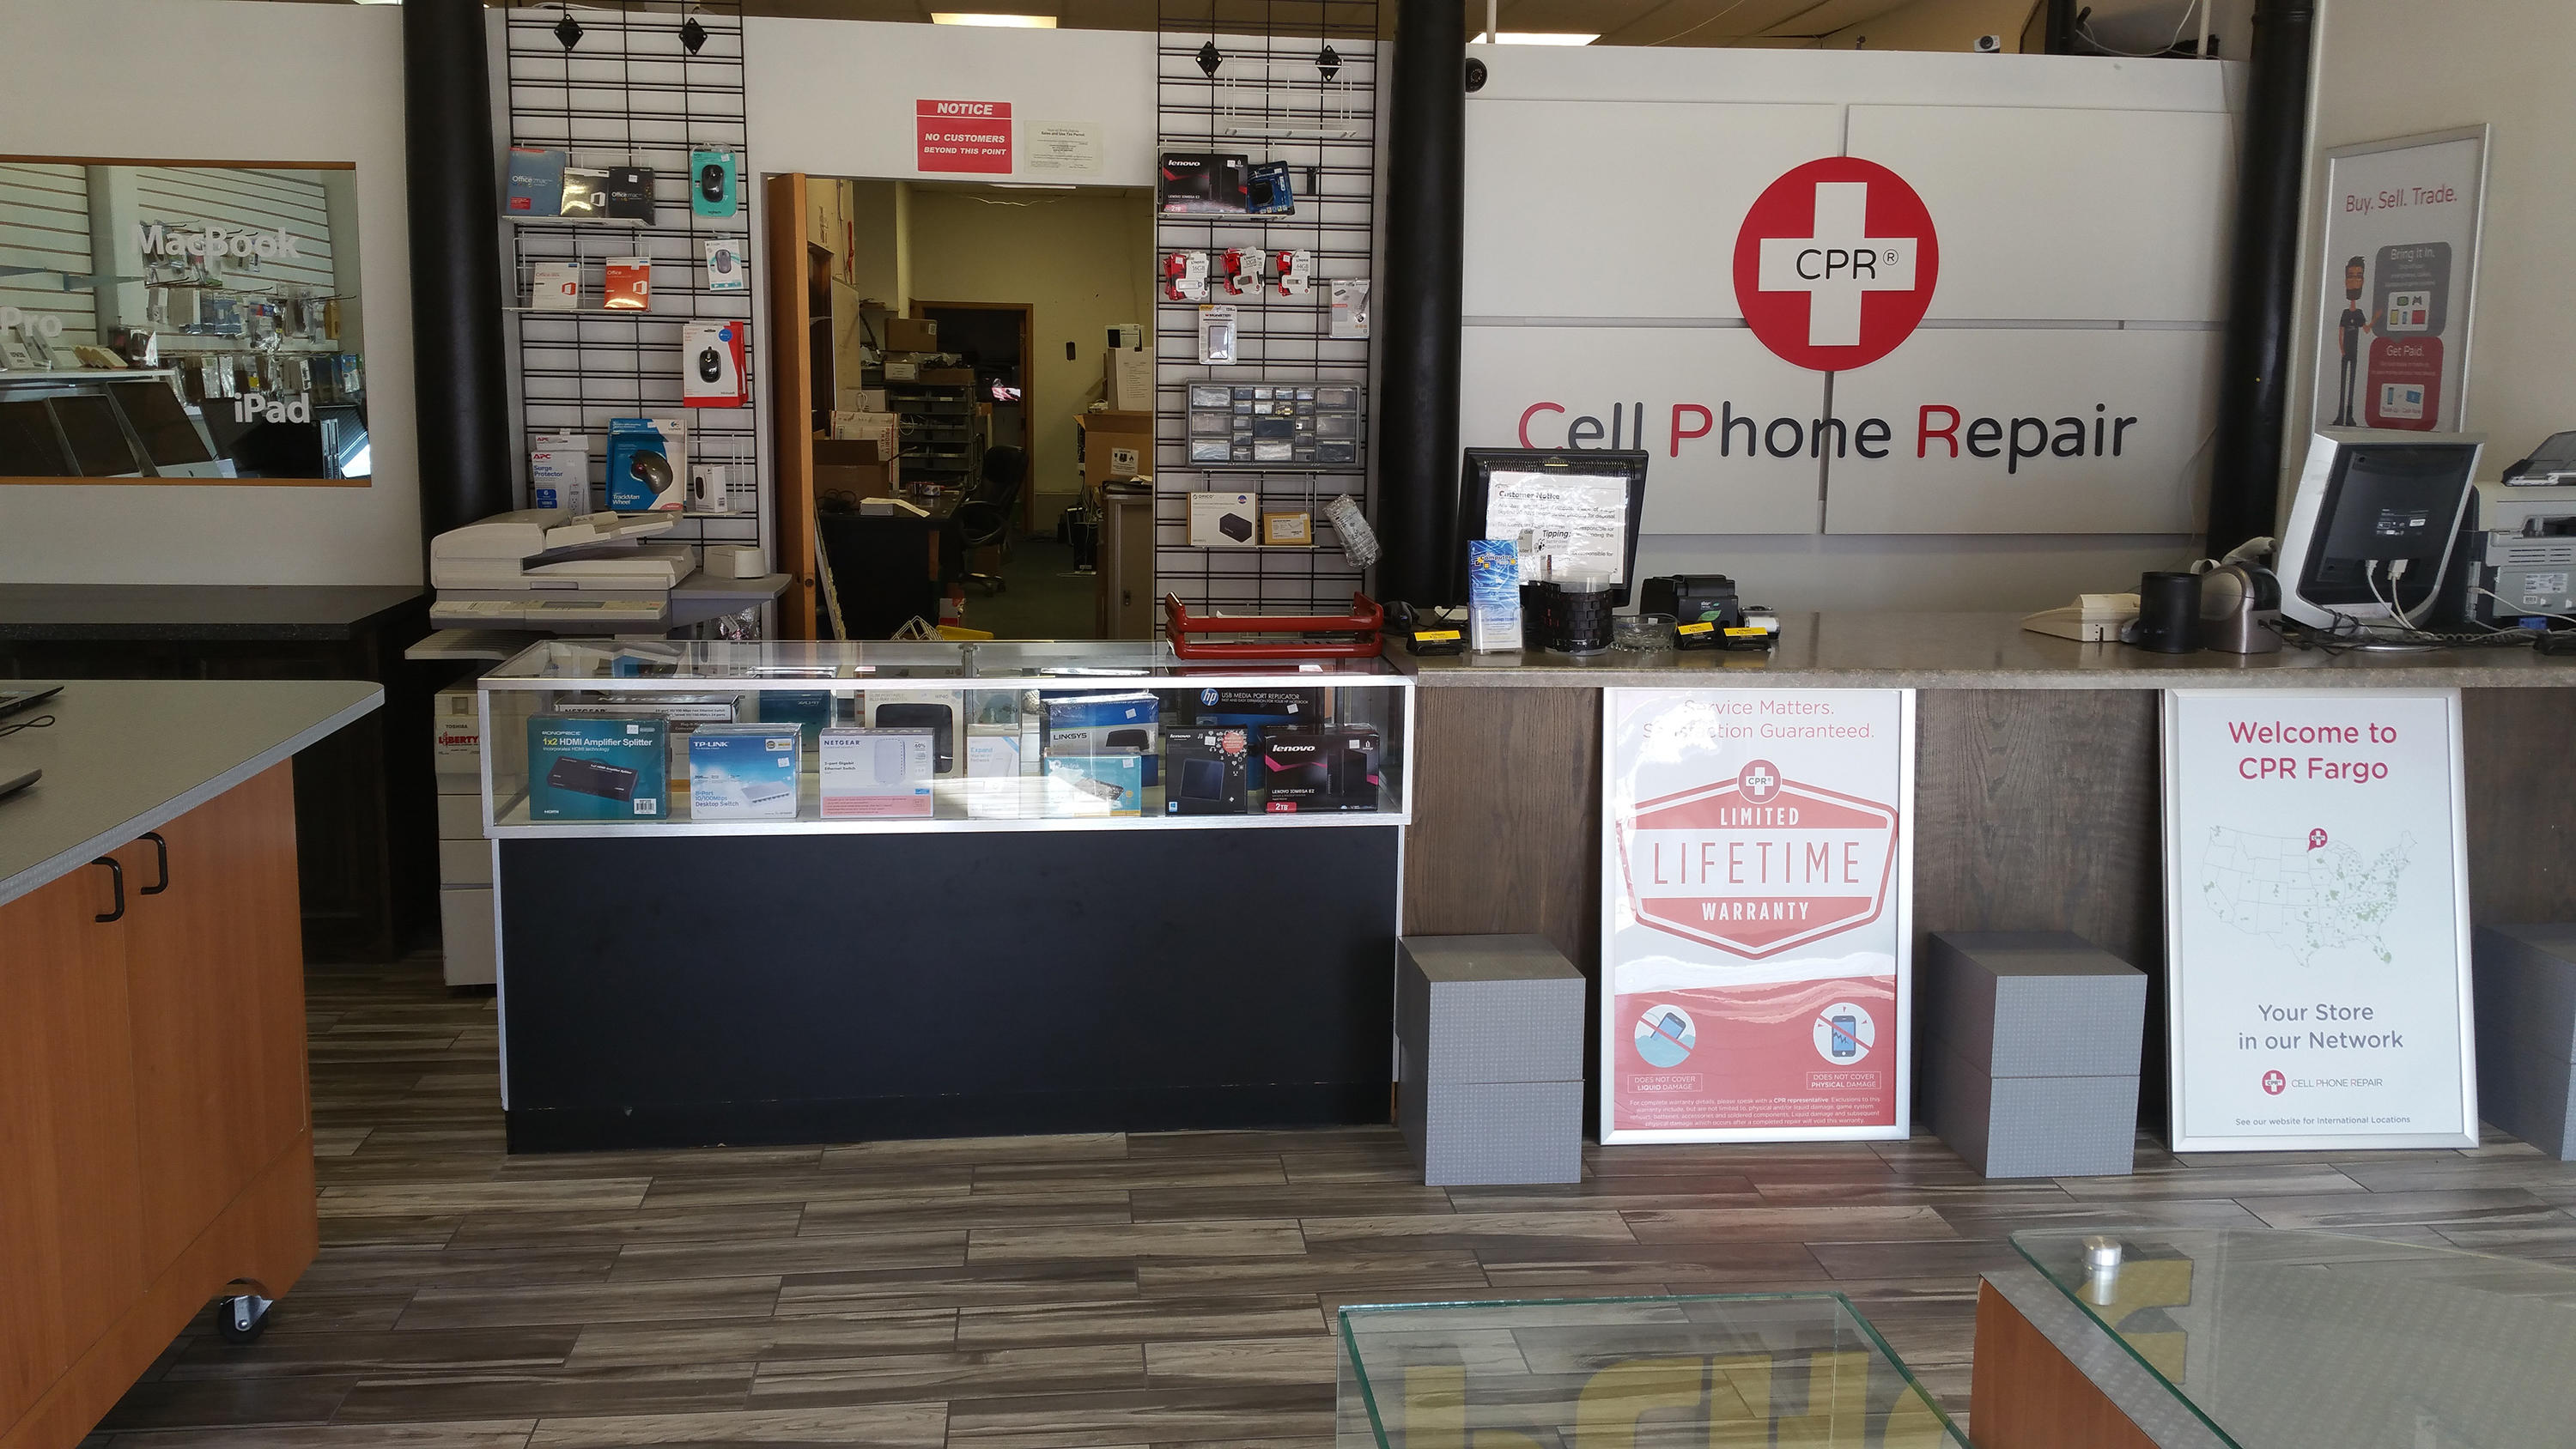 CPR Cell Phone Repair Fargo Photo